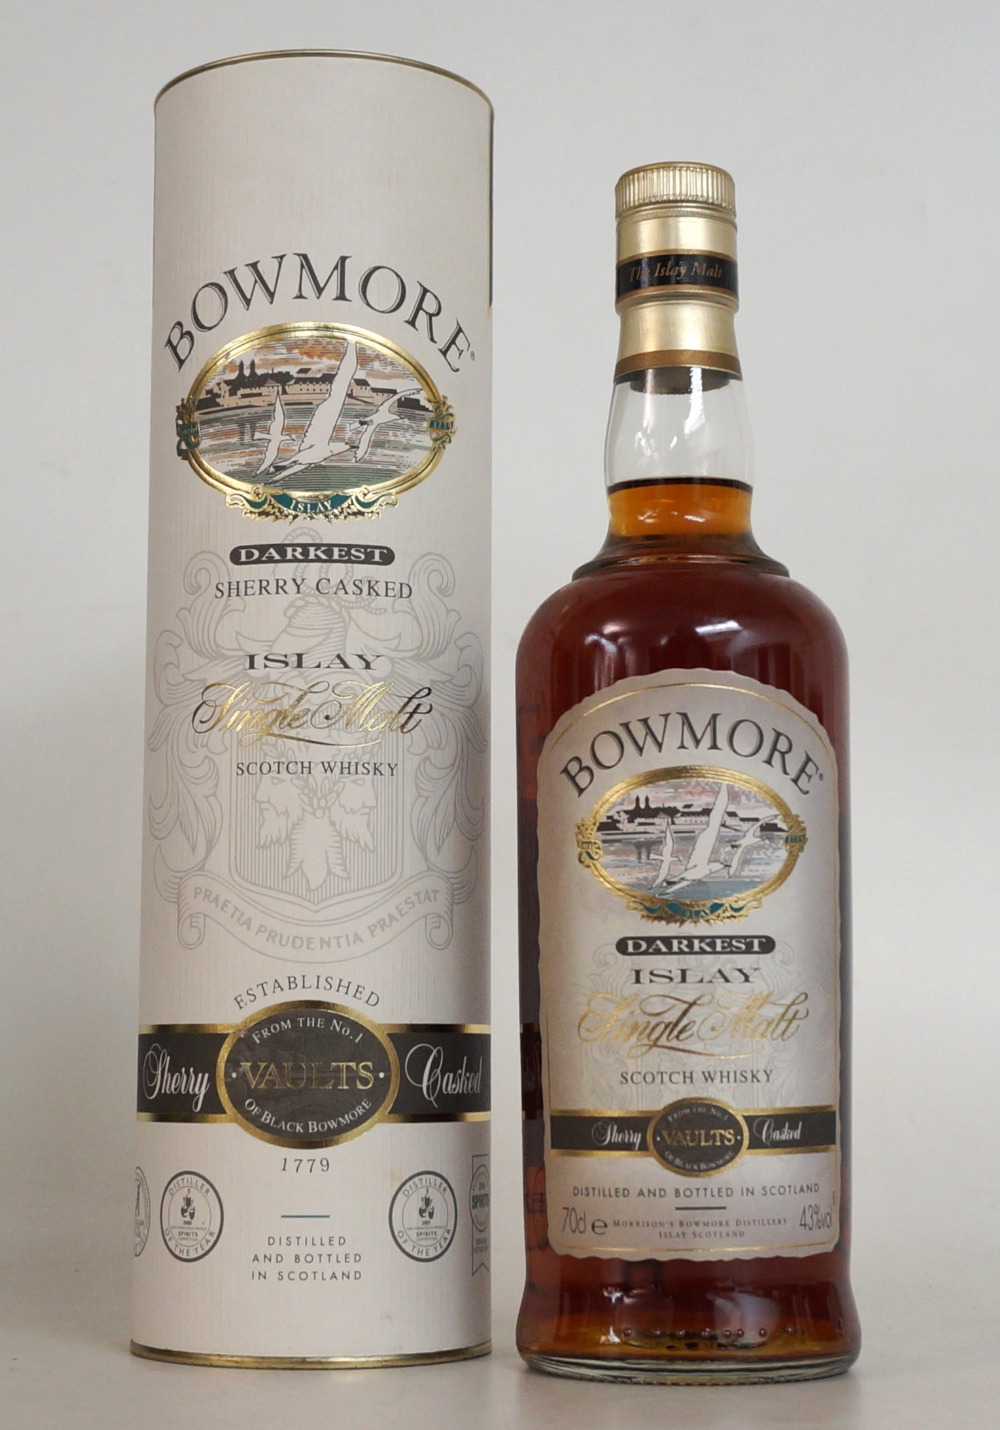 BOWMORE DARKEST
1 Bottle of Bowmore Darkest, Islay Malt. Seagull Label. OB. In presentation tube.